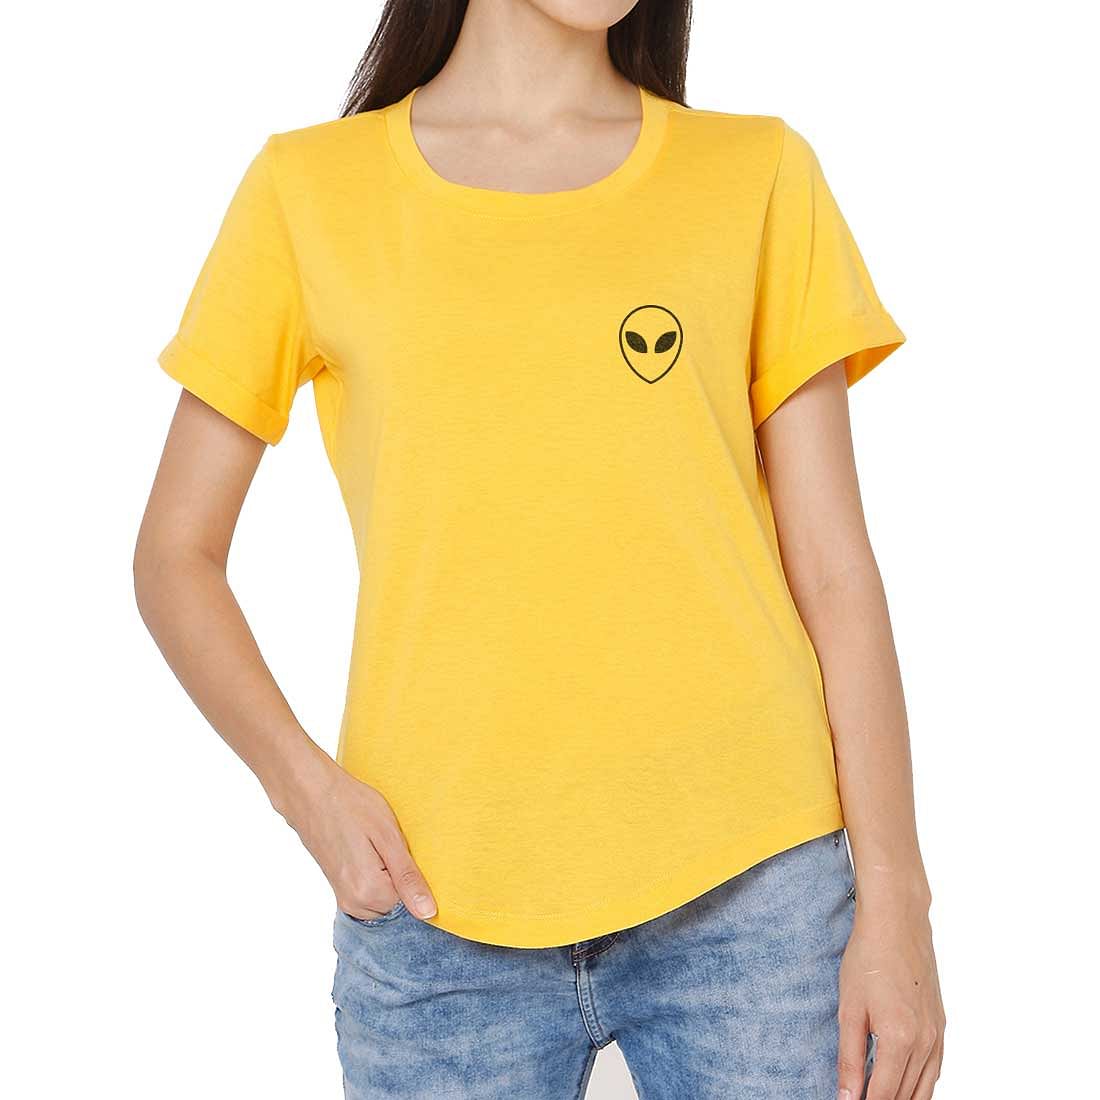 Cute T shirt For Girls  - Alien Nutcase